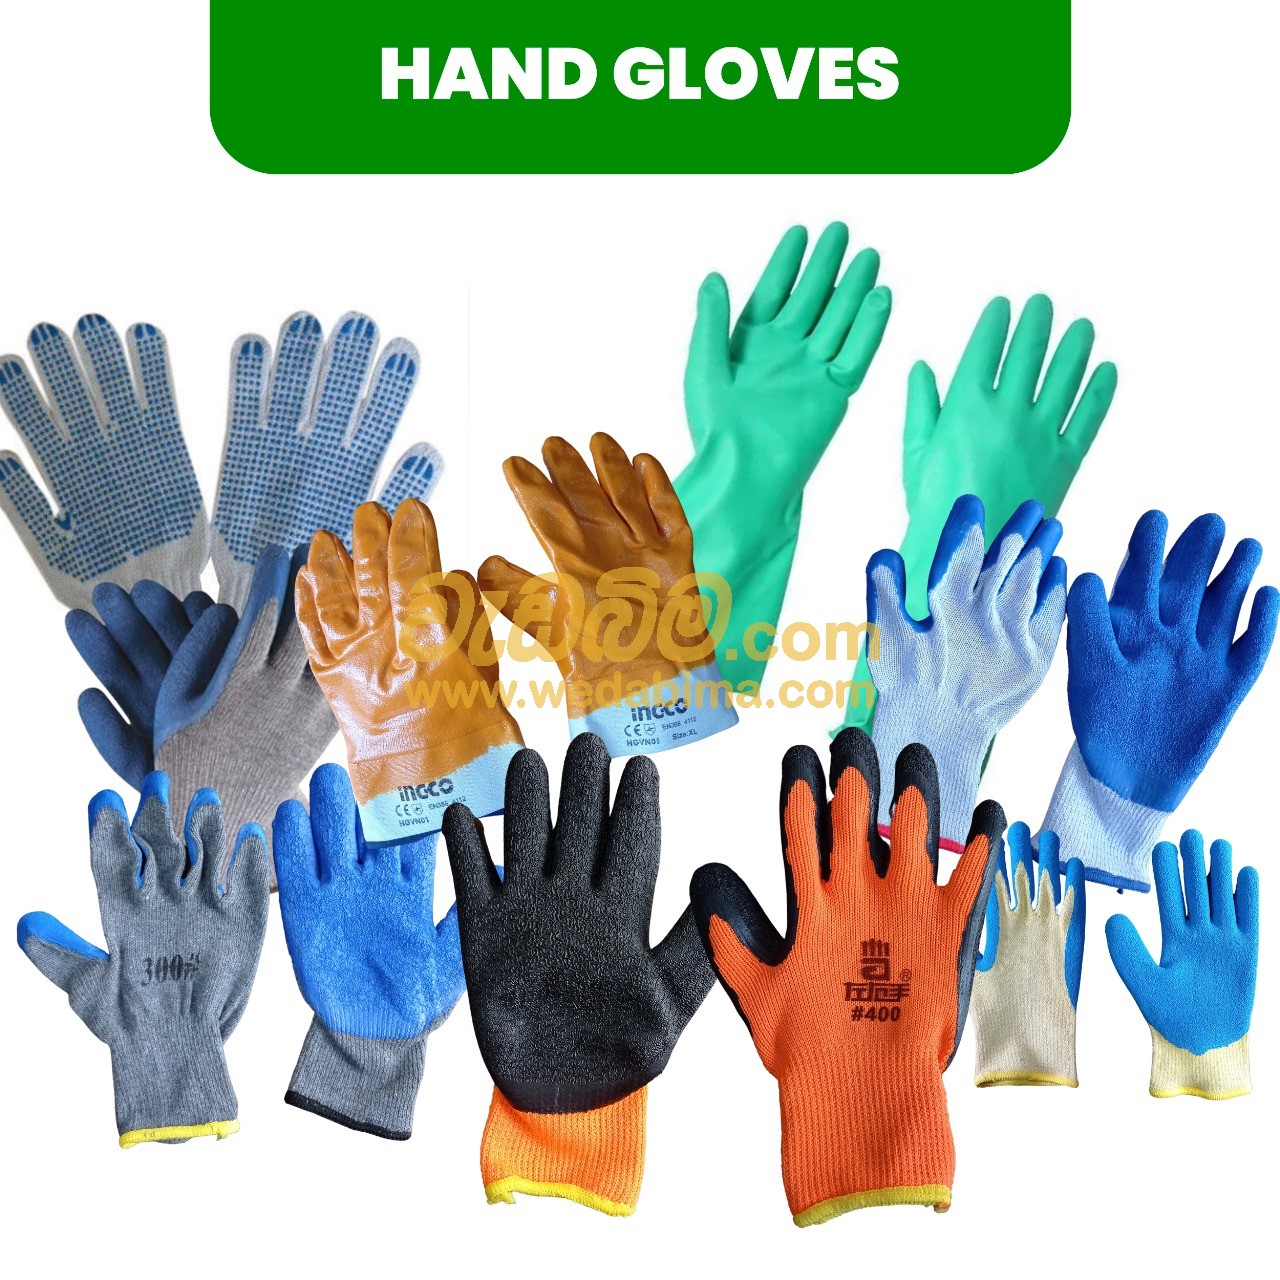 Cotton Safety Gloves Suppliers in Sri Lanka